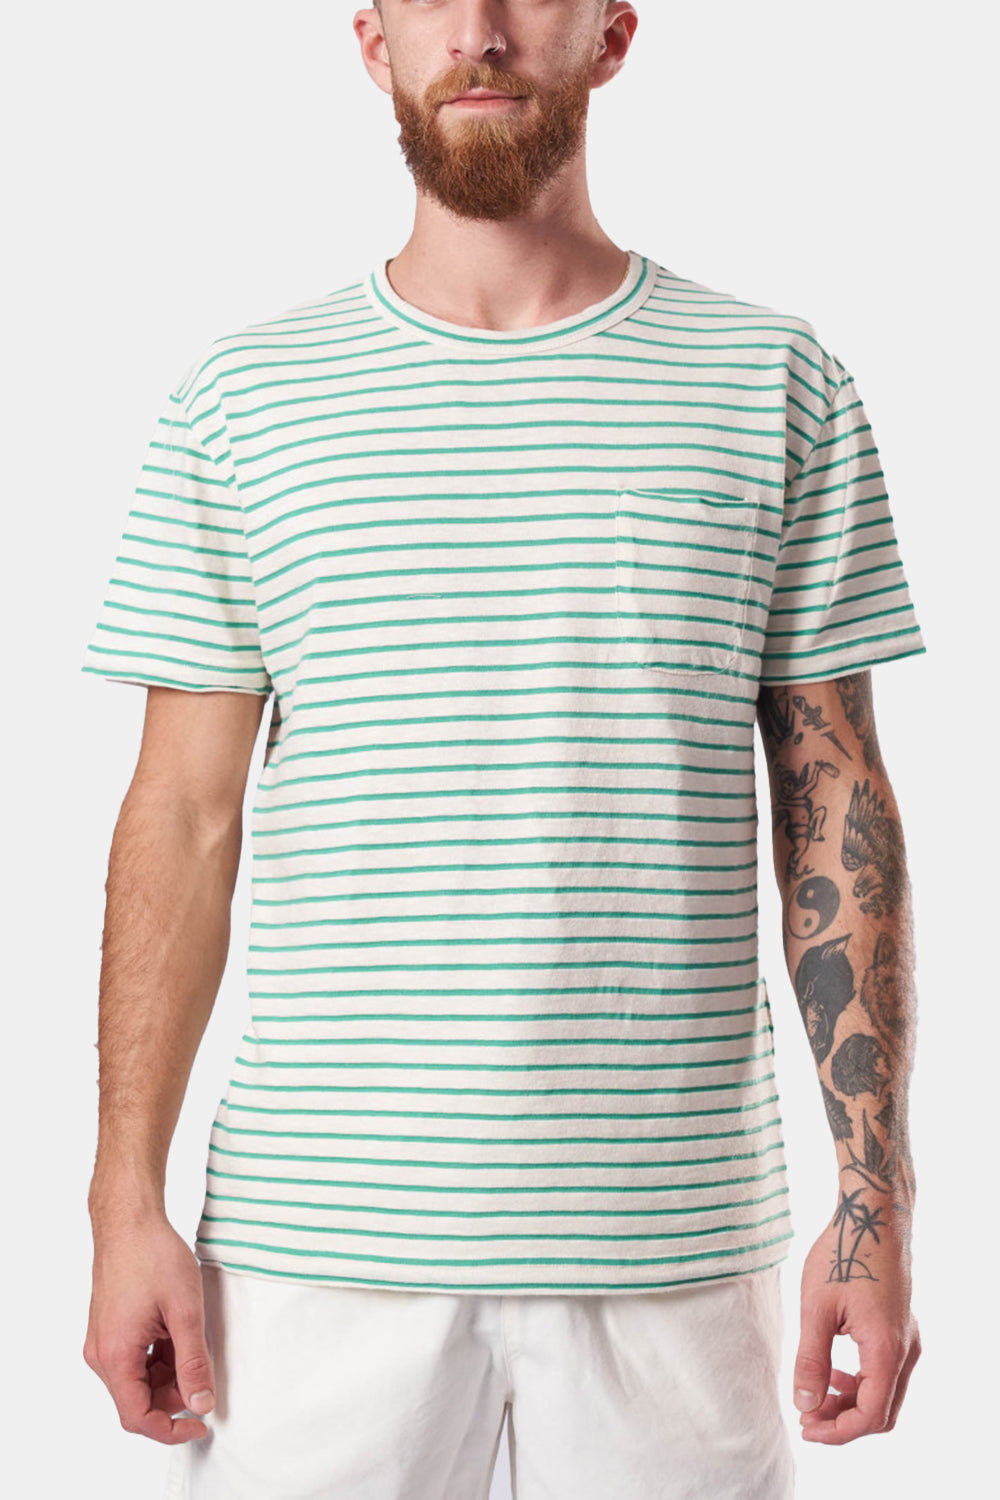 La Paz Guerreiro T-Shirt (Off-White/Gumdrop Green)